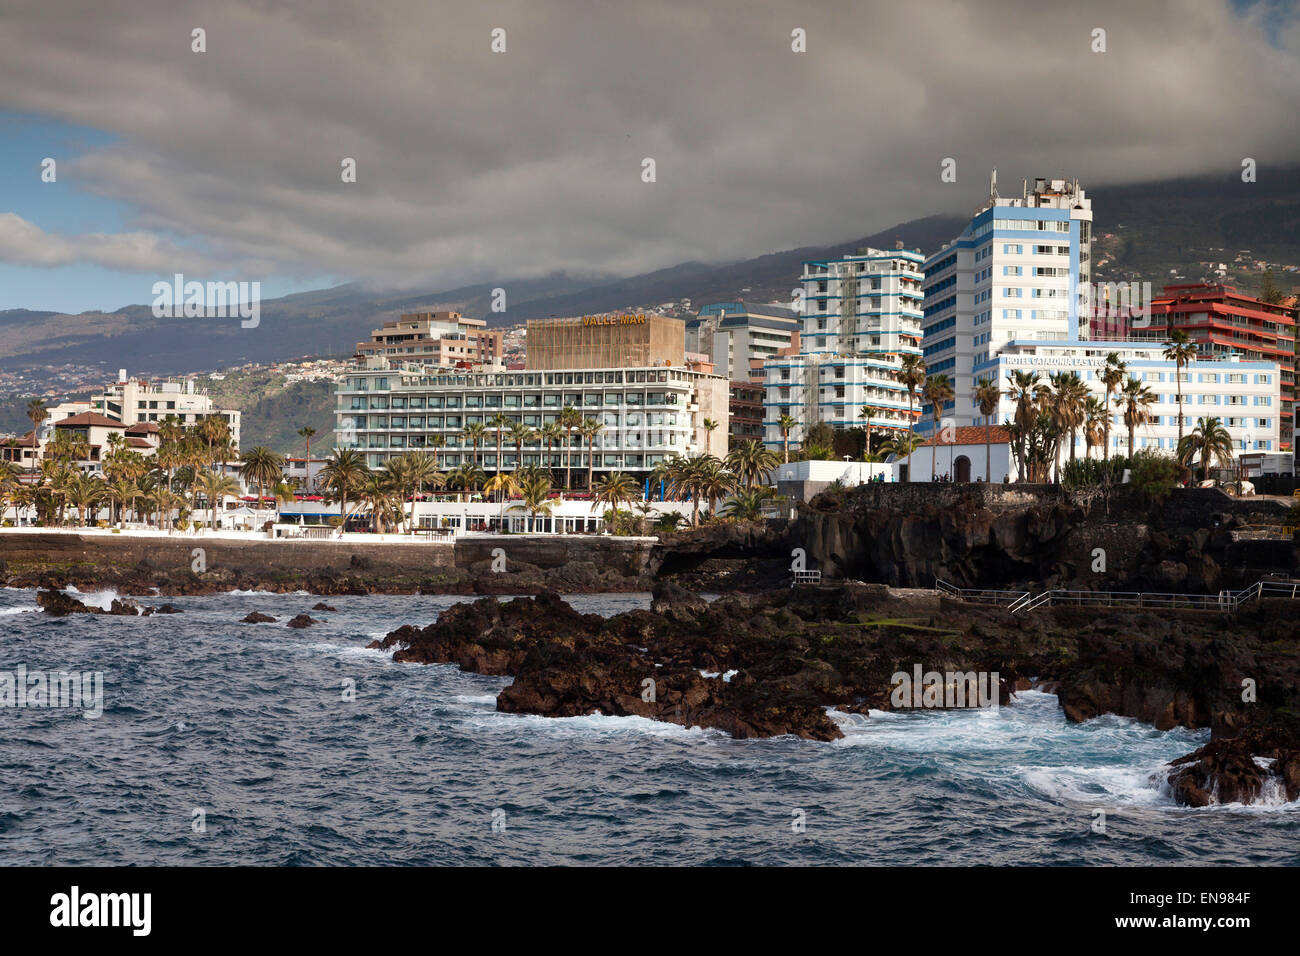 Puerto de la Cruz, Tenerife, Canaries, Espagne, Europe Banque D'Images